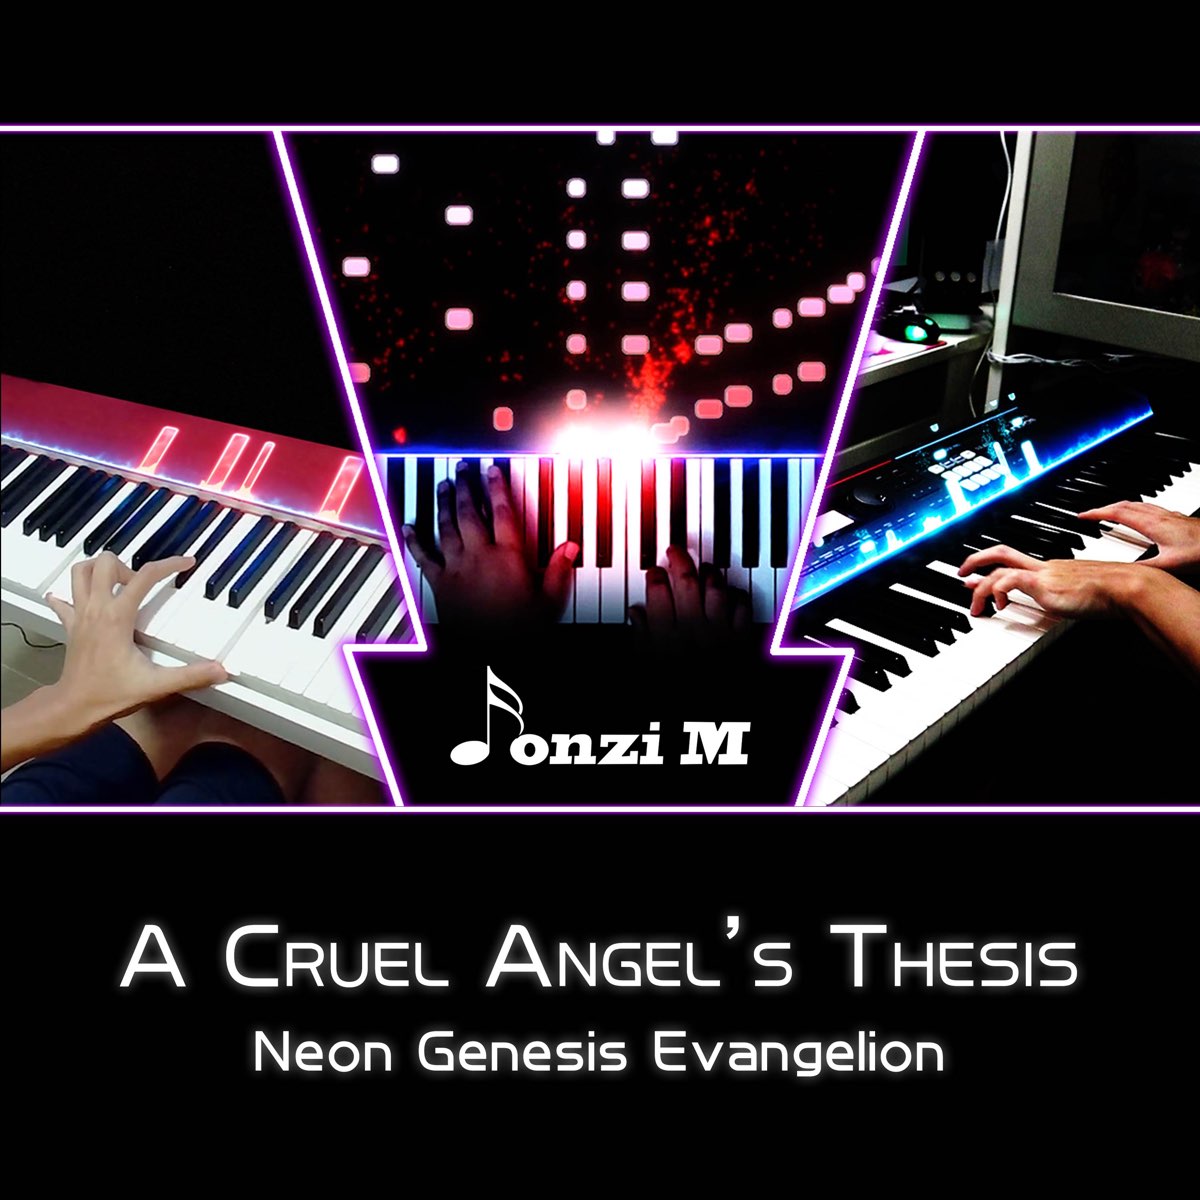 a cruel angel's thesis apple music